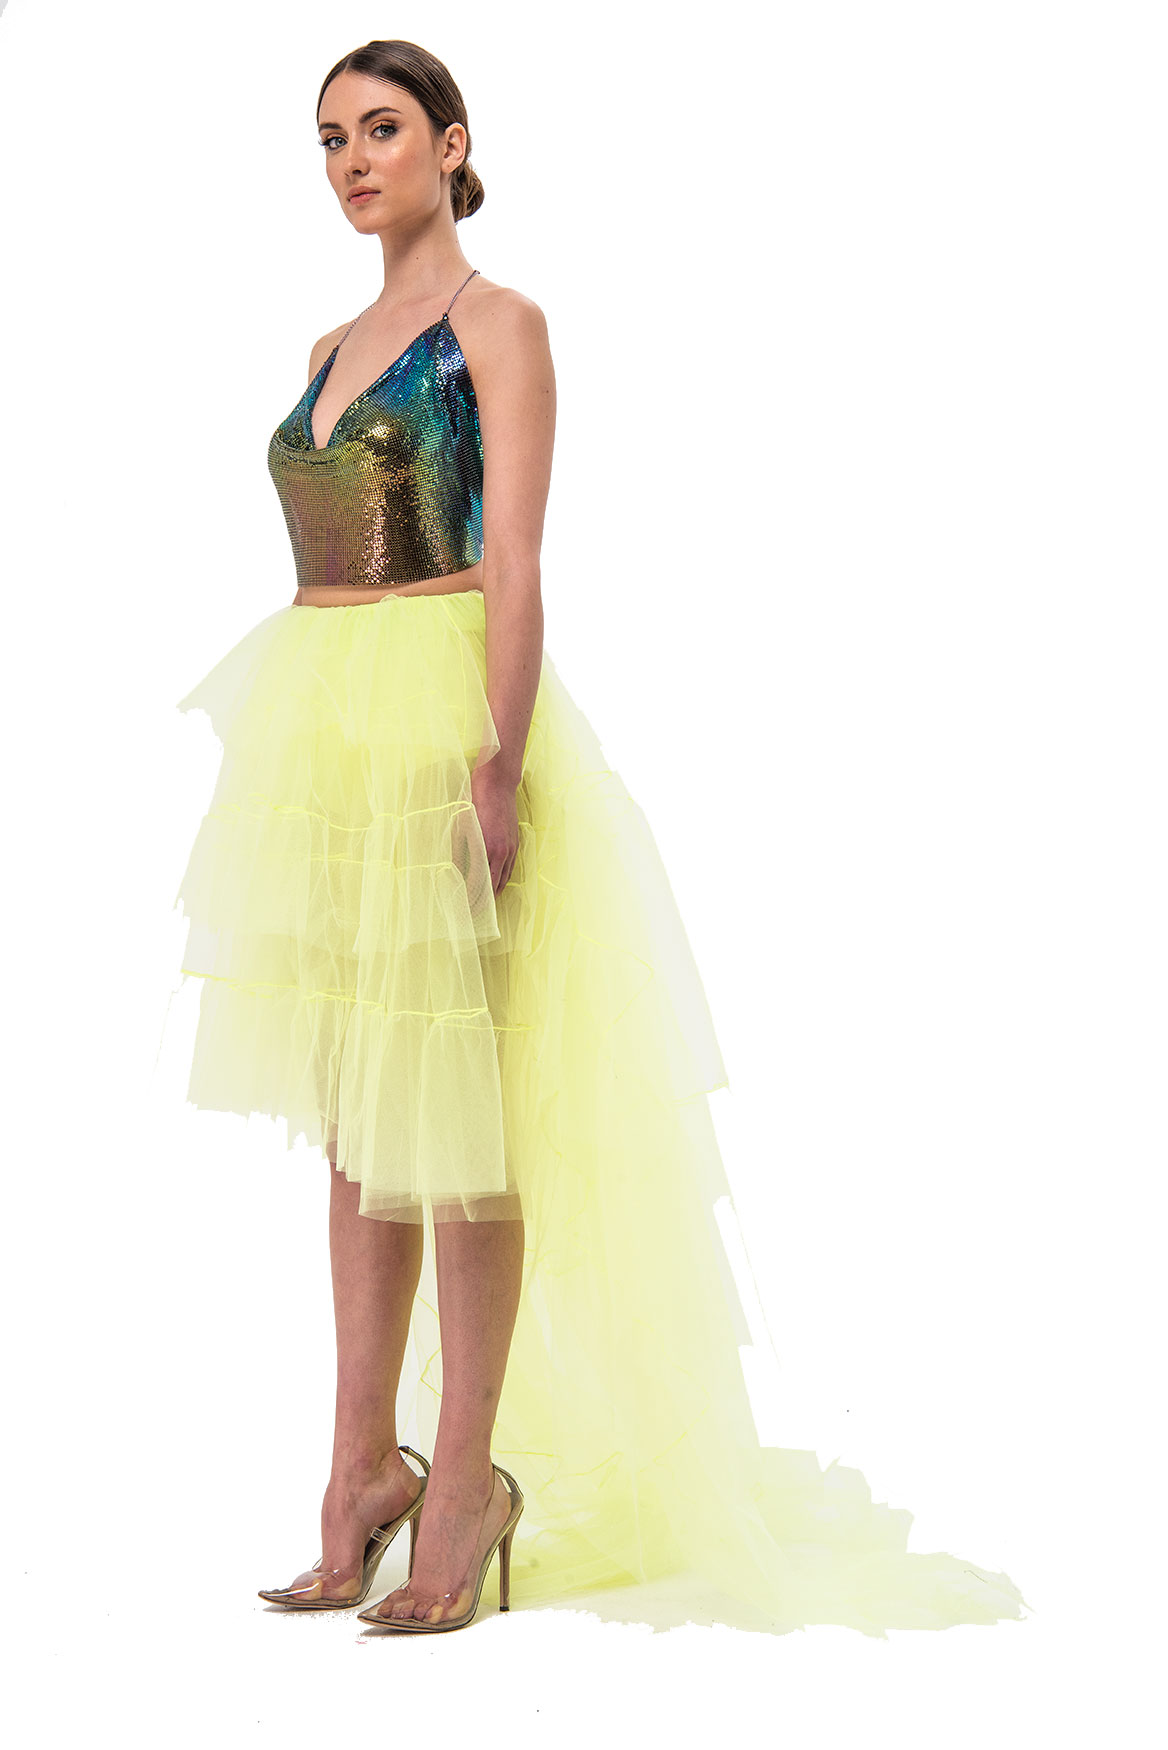 Tulle Detail Strapless Neon Yellow Sheer Mini Dress